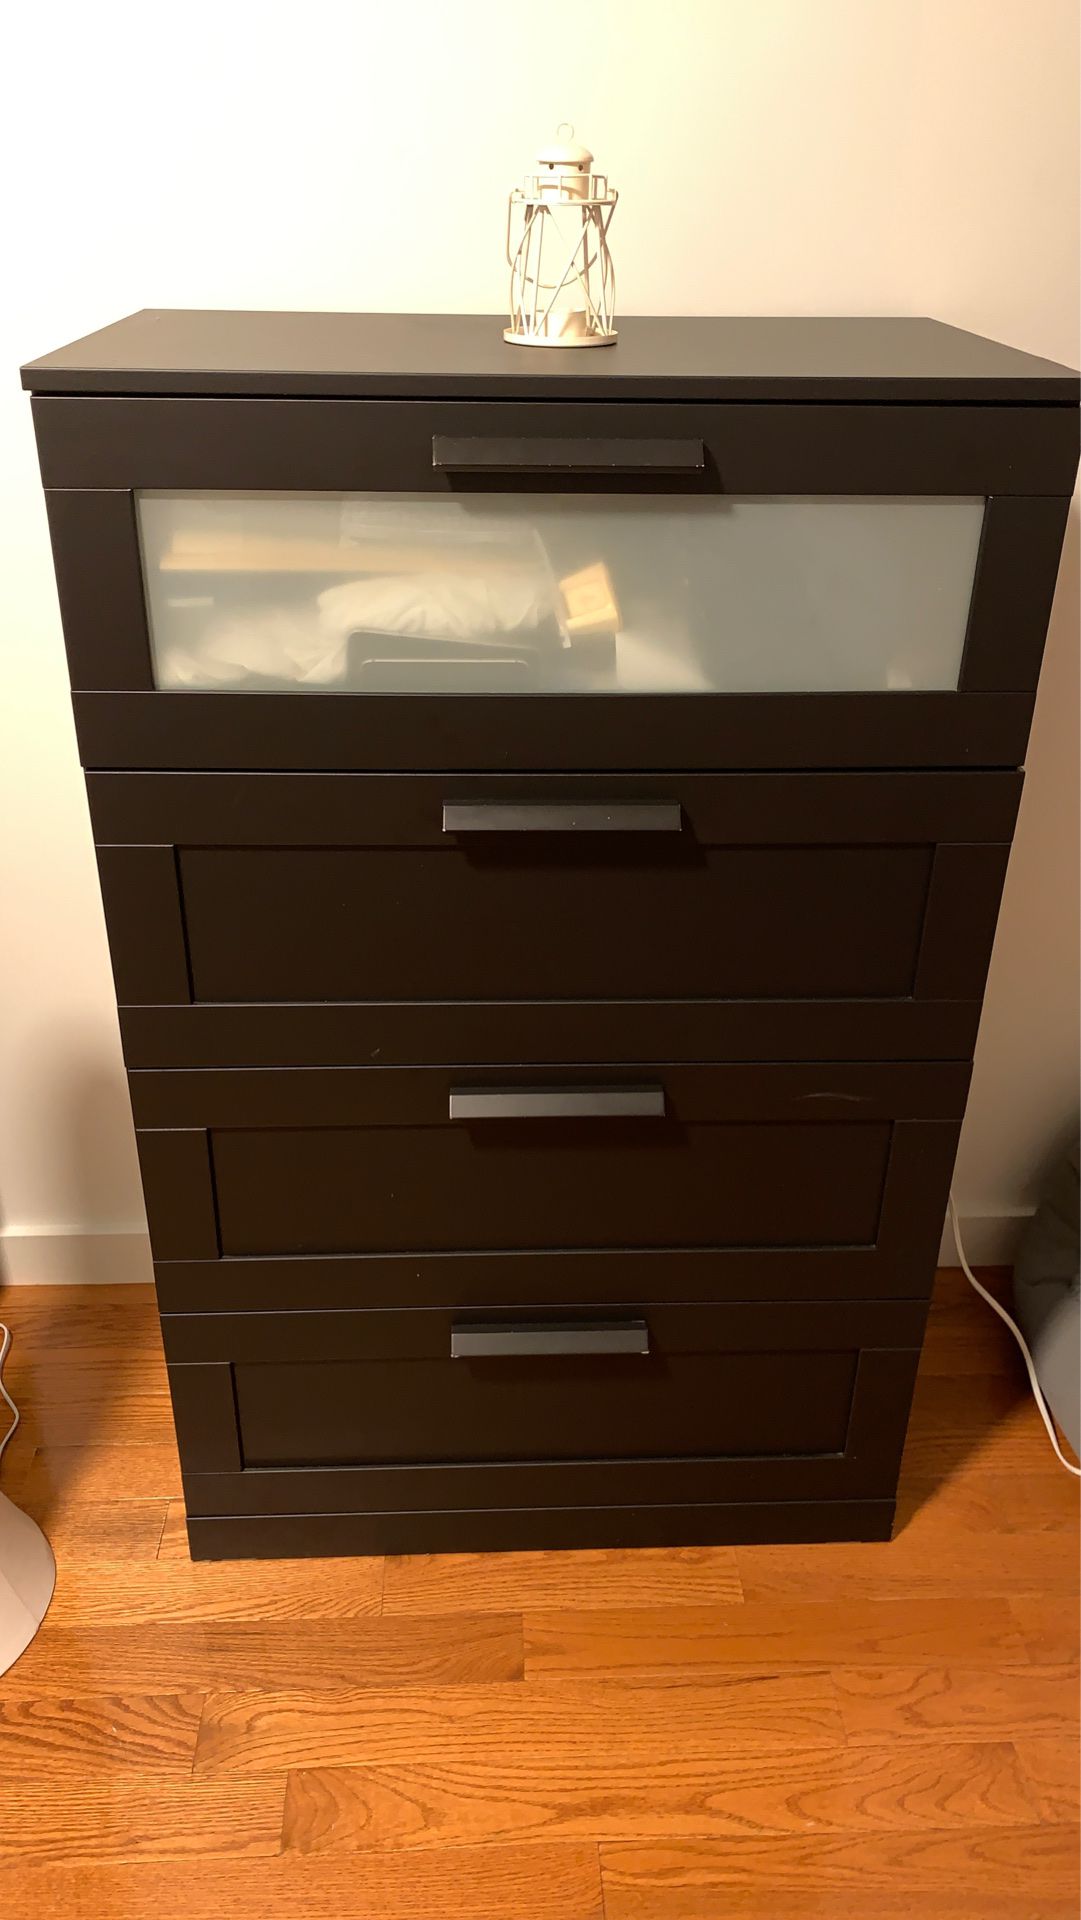 Ikea 4 drawer dresser